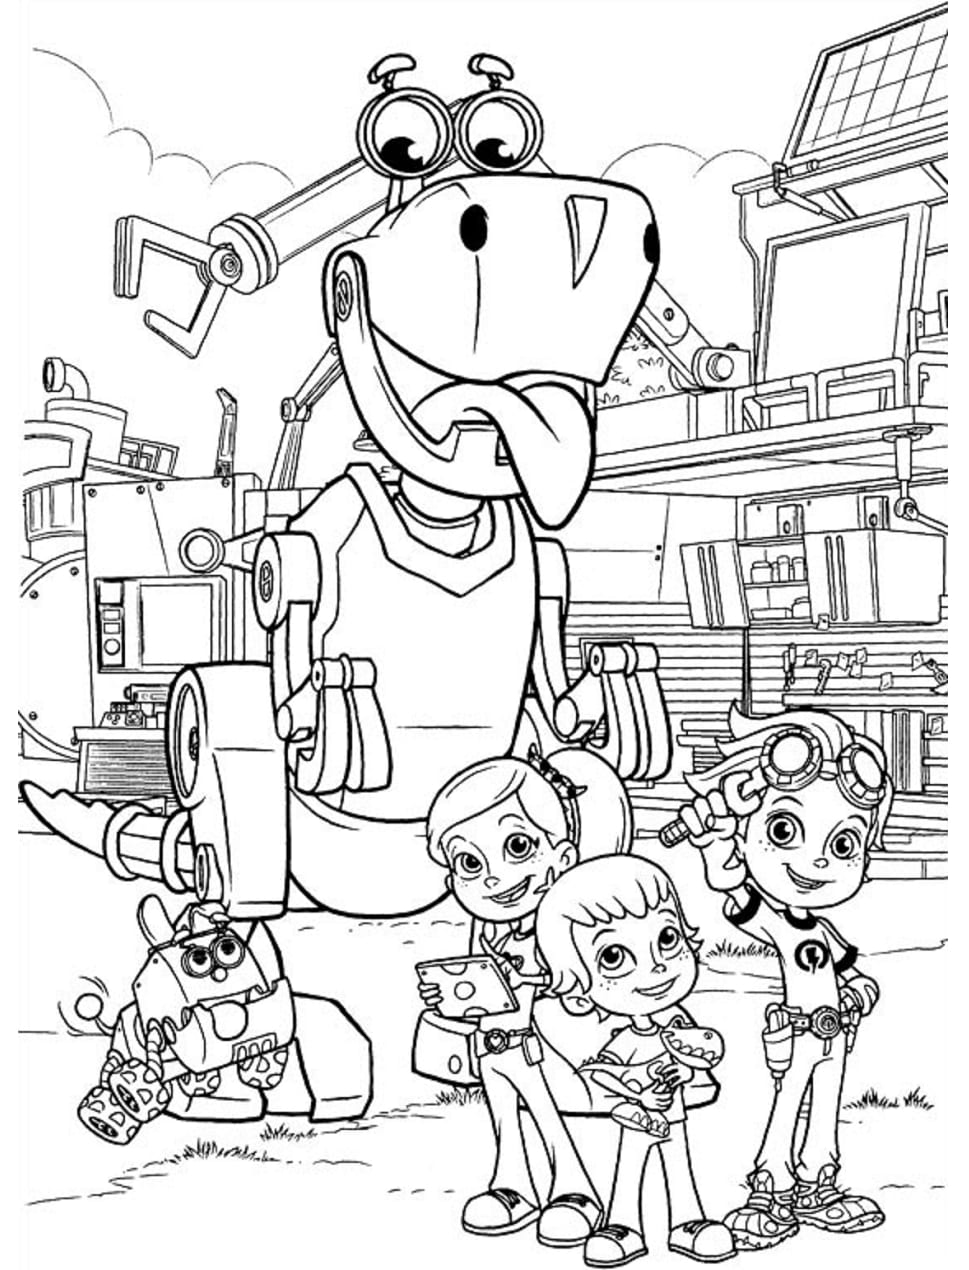 Personnages de Rusty Rivets coloring page